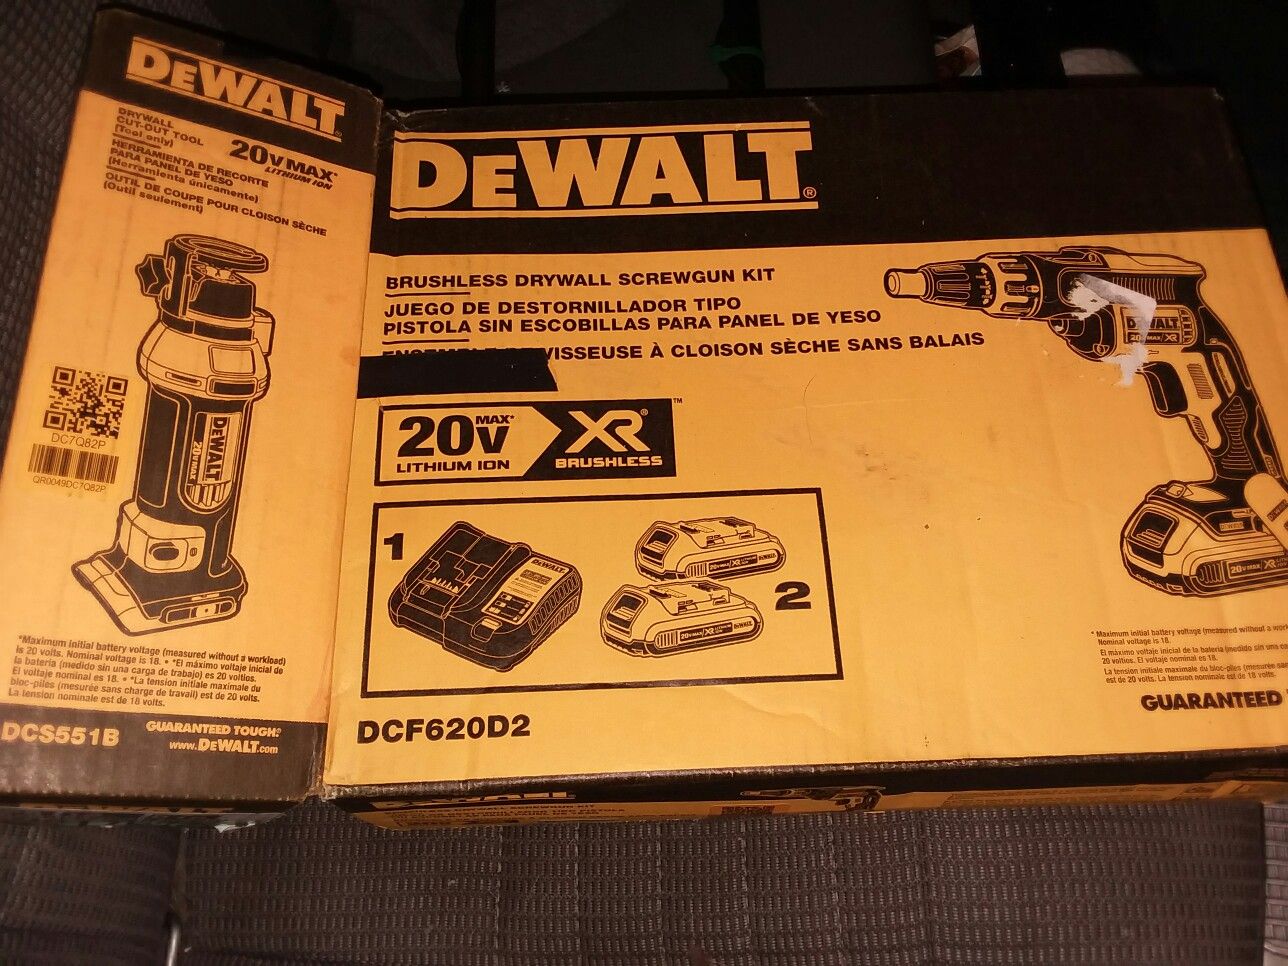 Drywall power screw gun and cutting tool